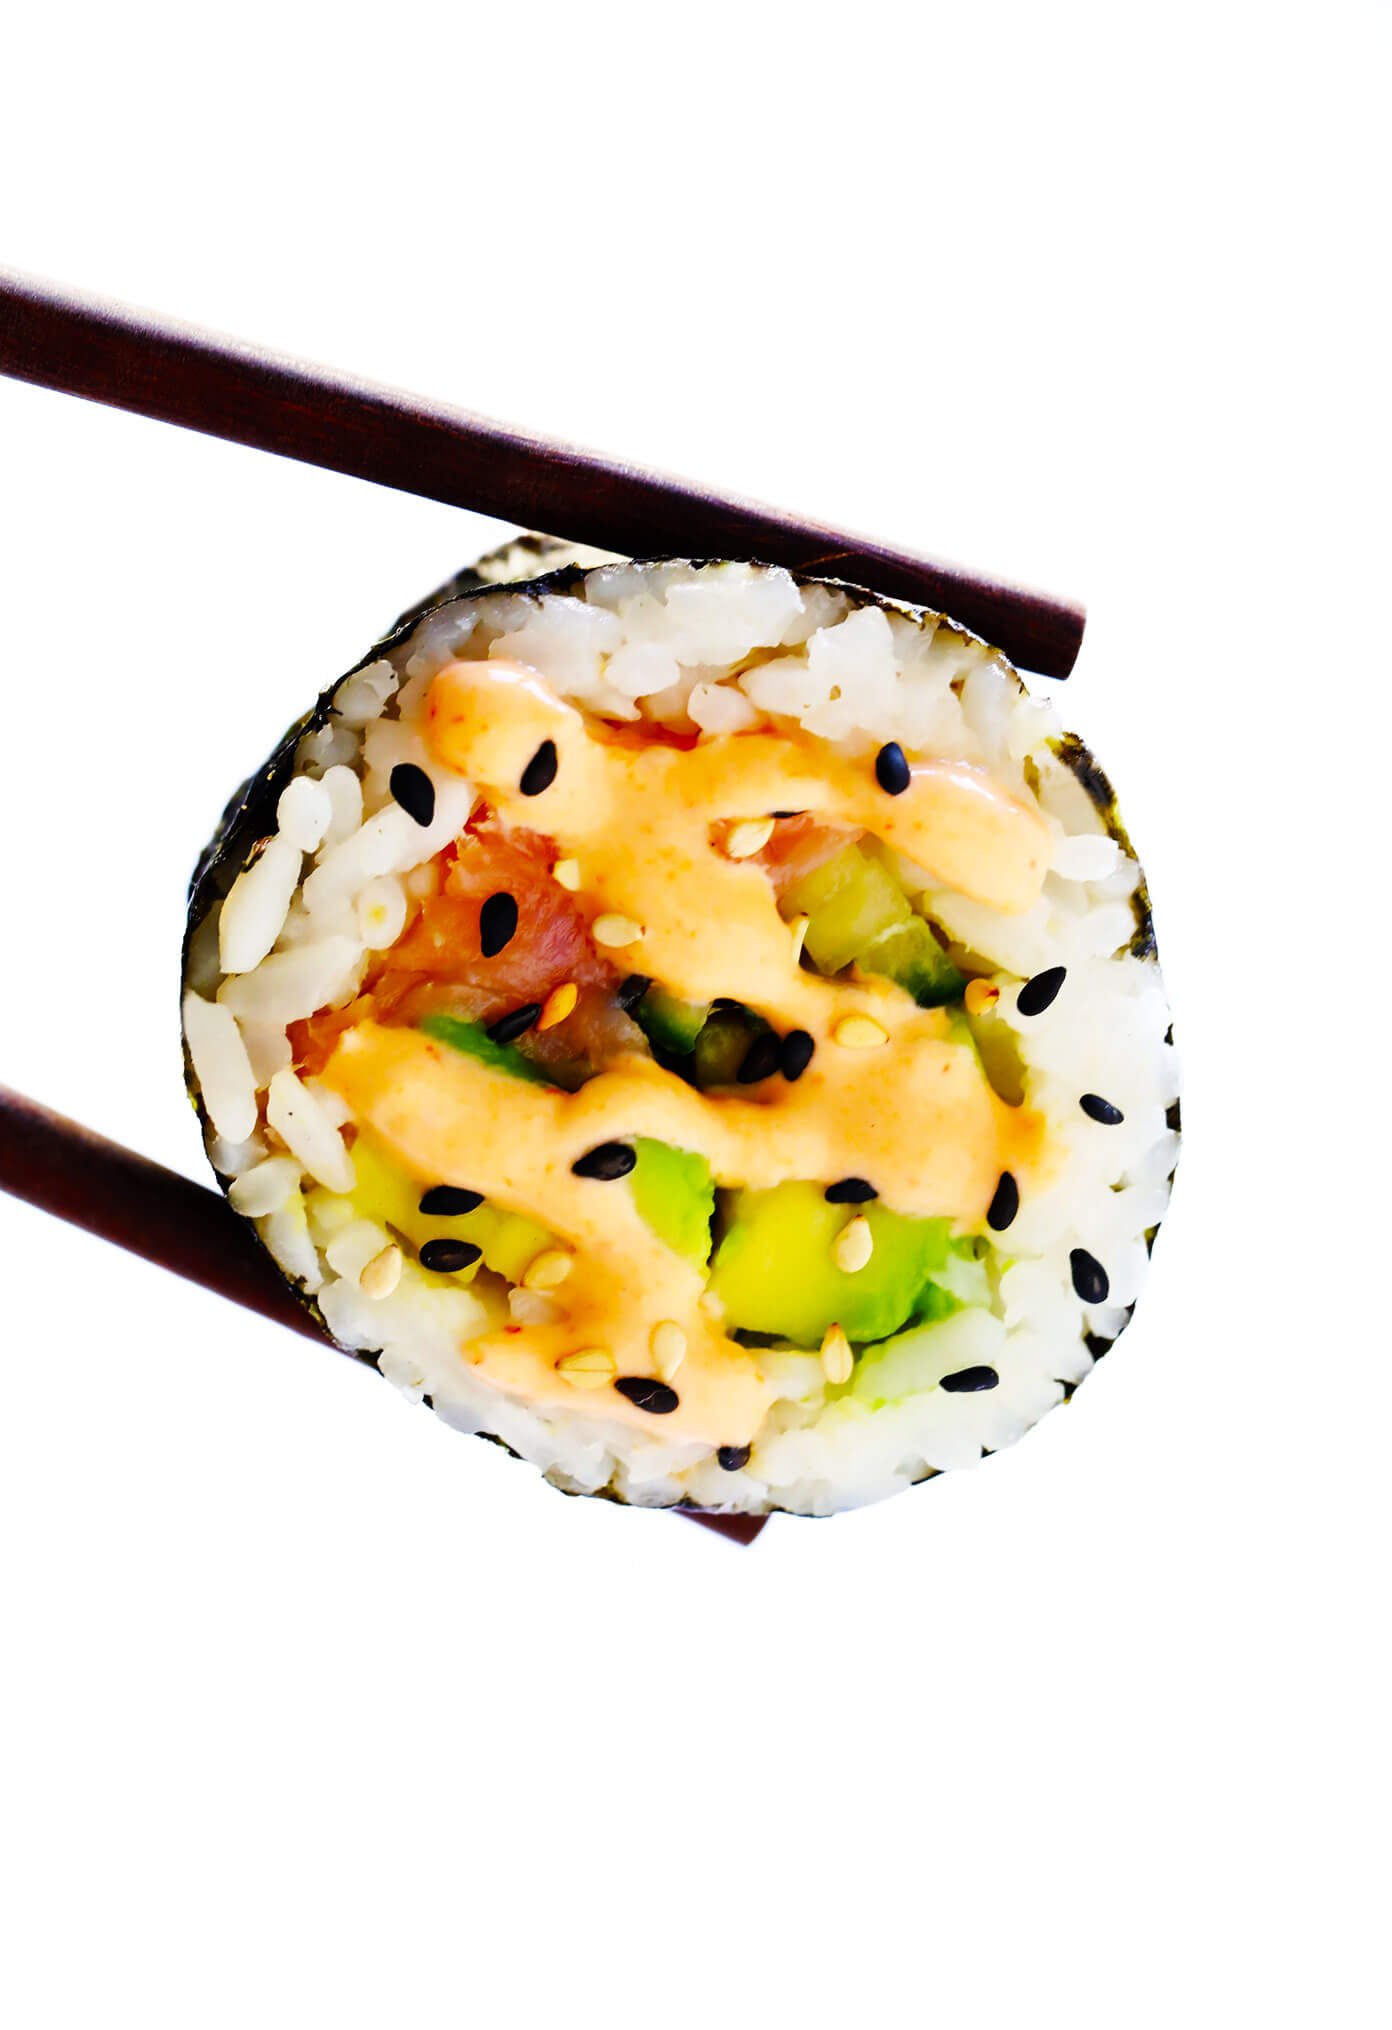 How To Make Sushi Rolls (Maki Rolls) | Holding Sushi with Chopsticks